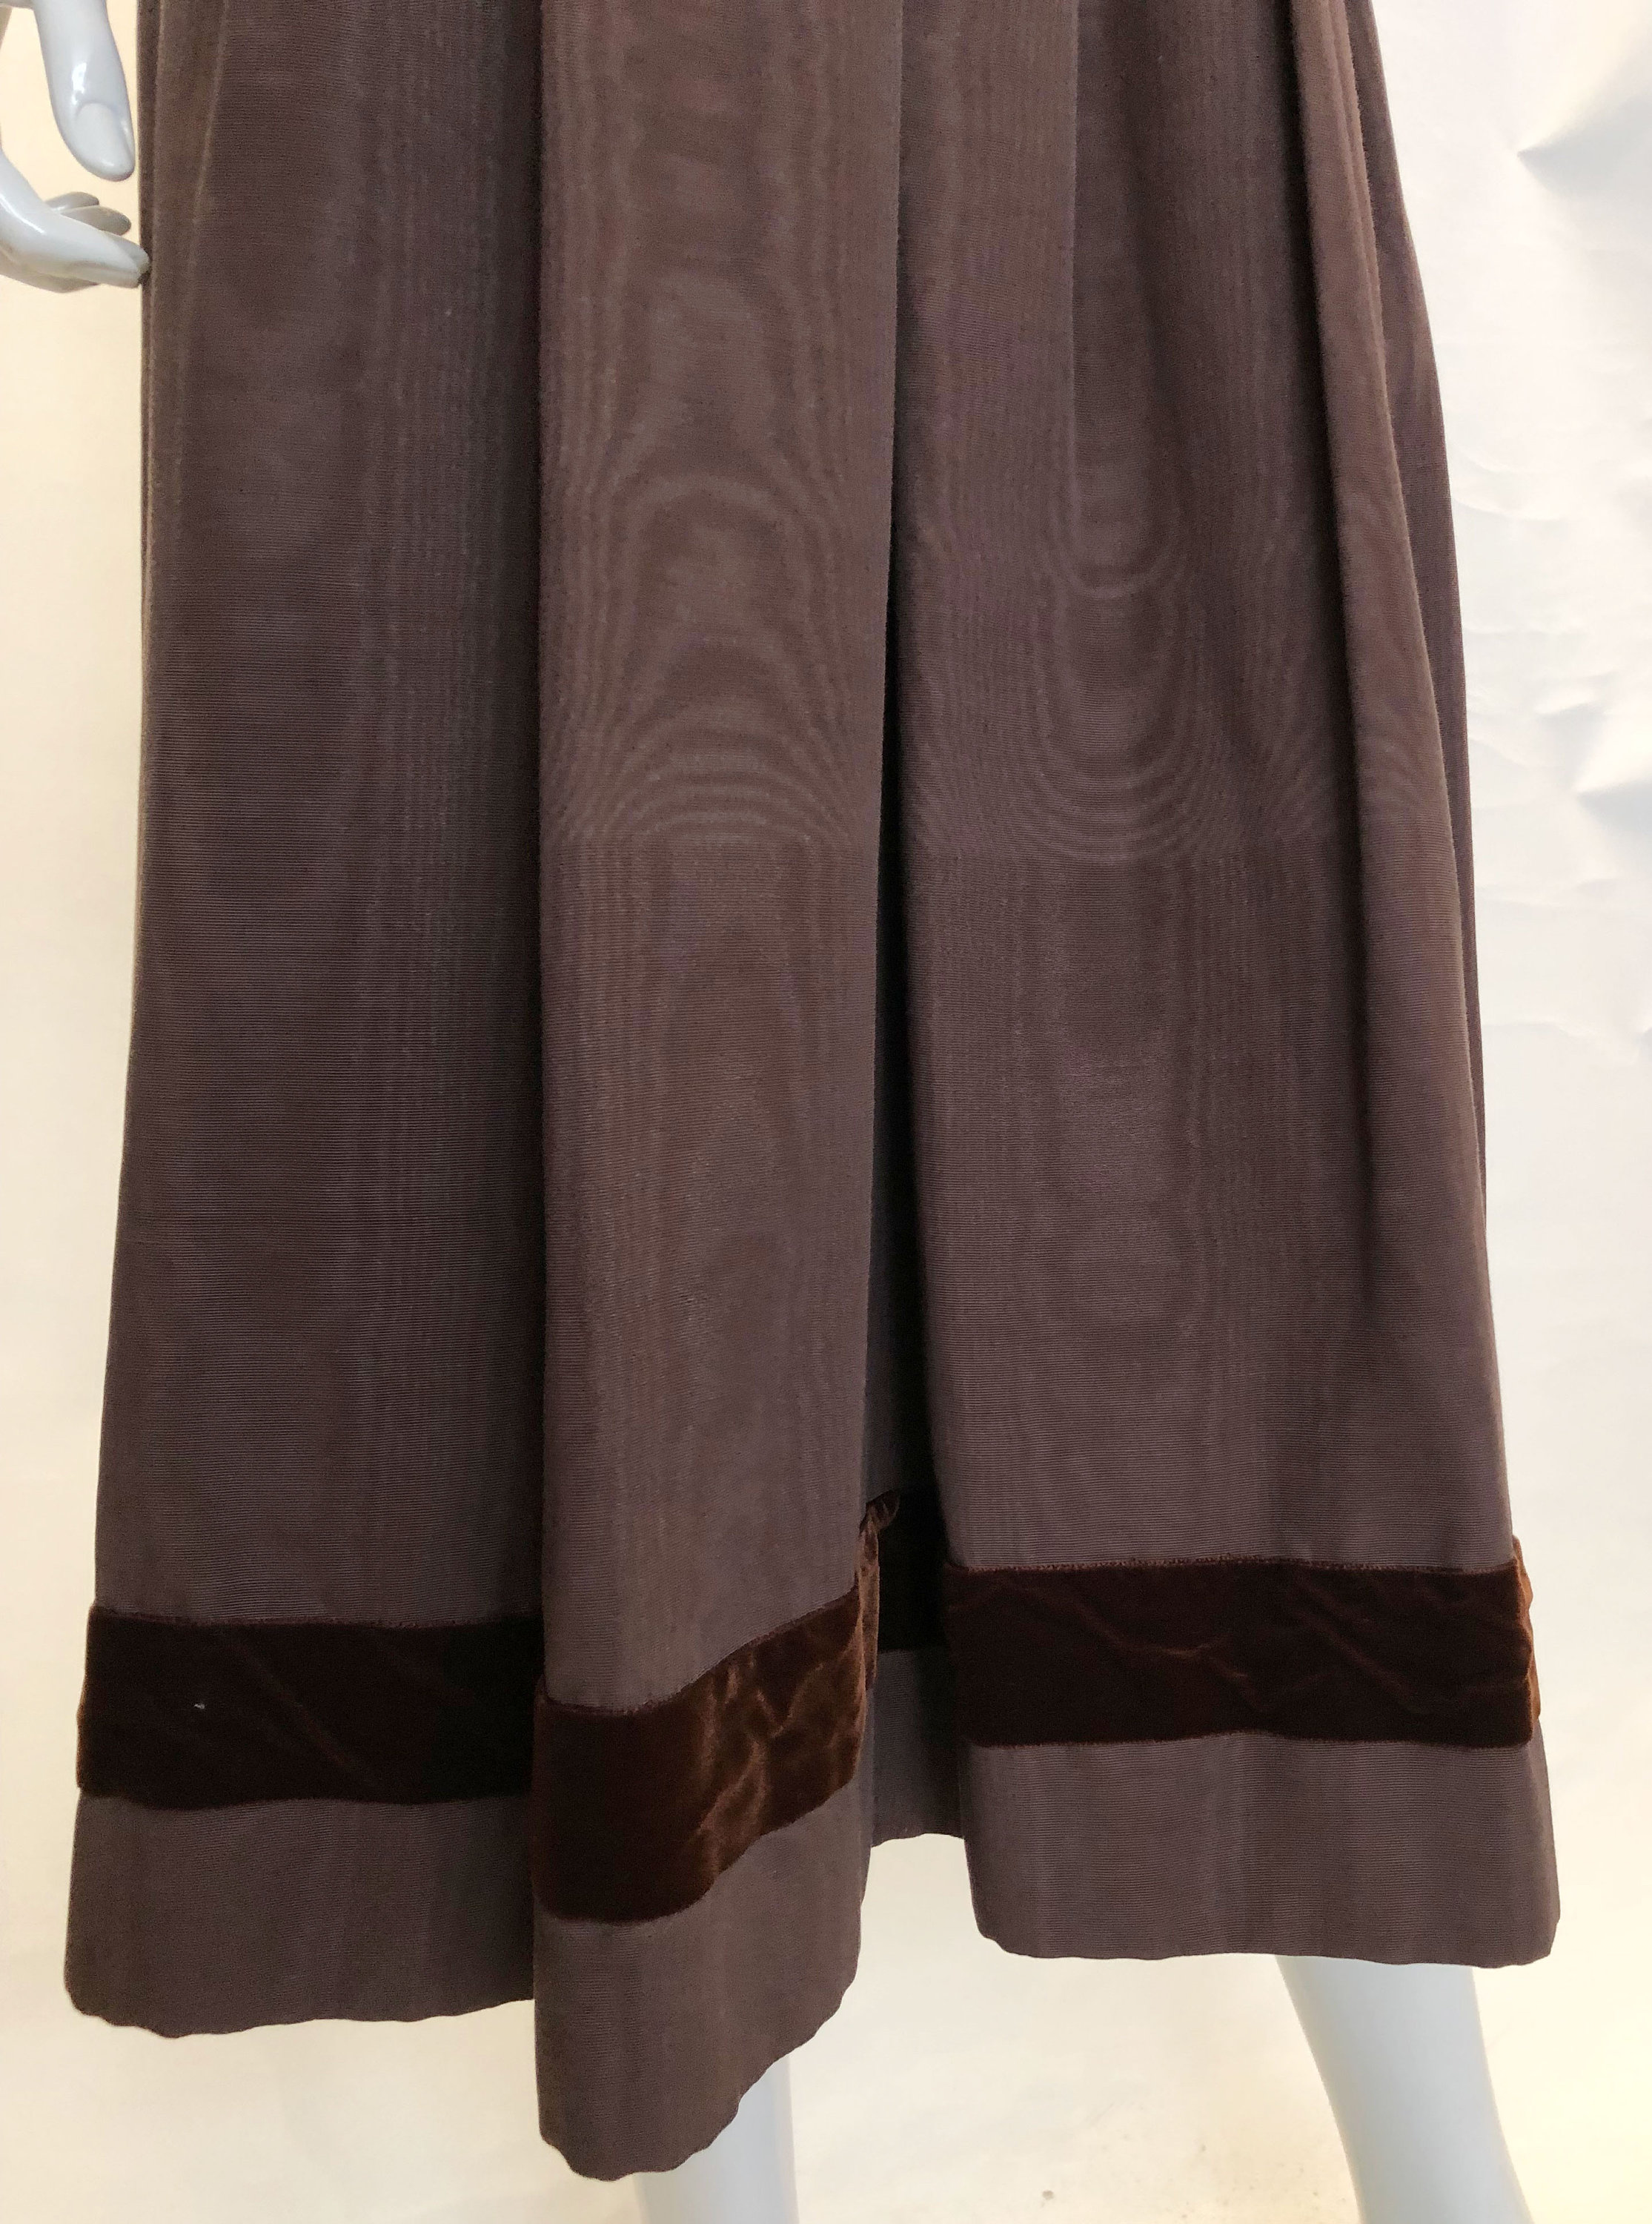 A Vintage 1970s Brown YSL Rive Gauche Skirt - Etsy